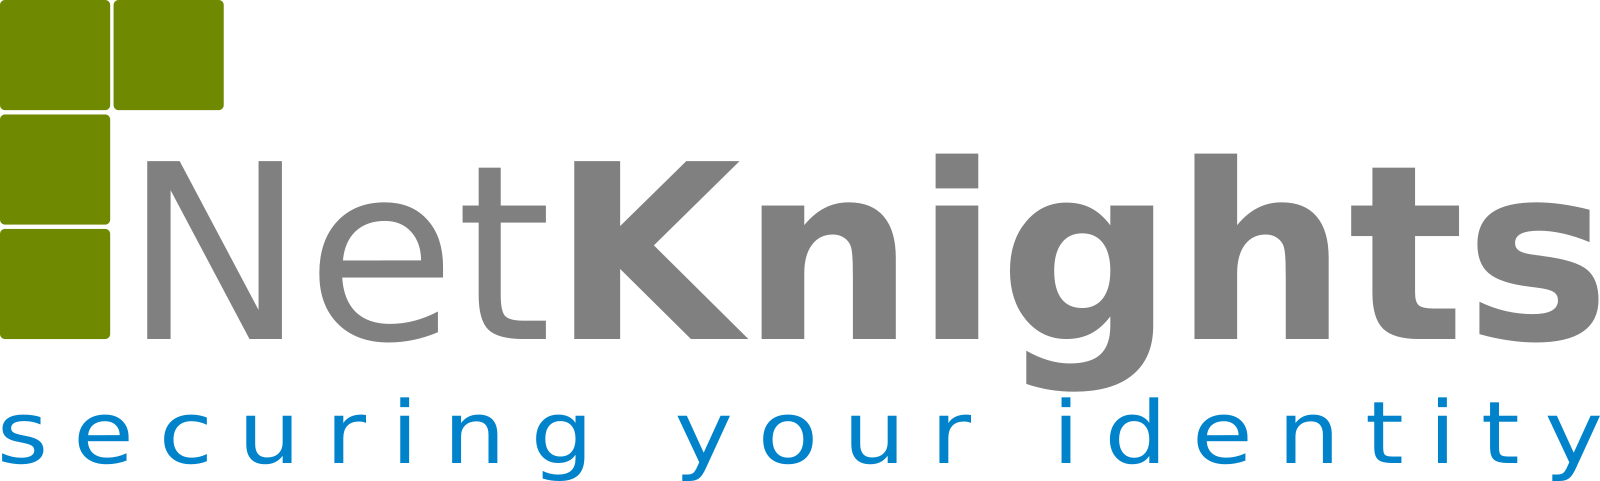 netknights logo